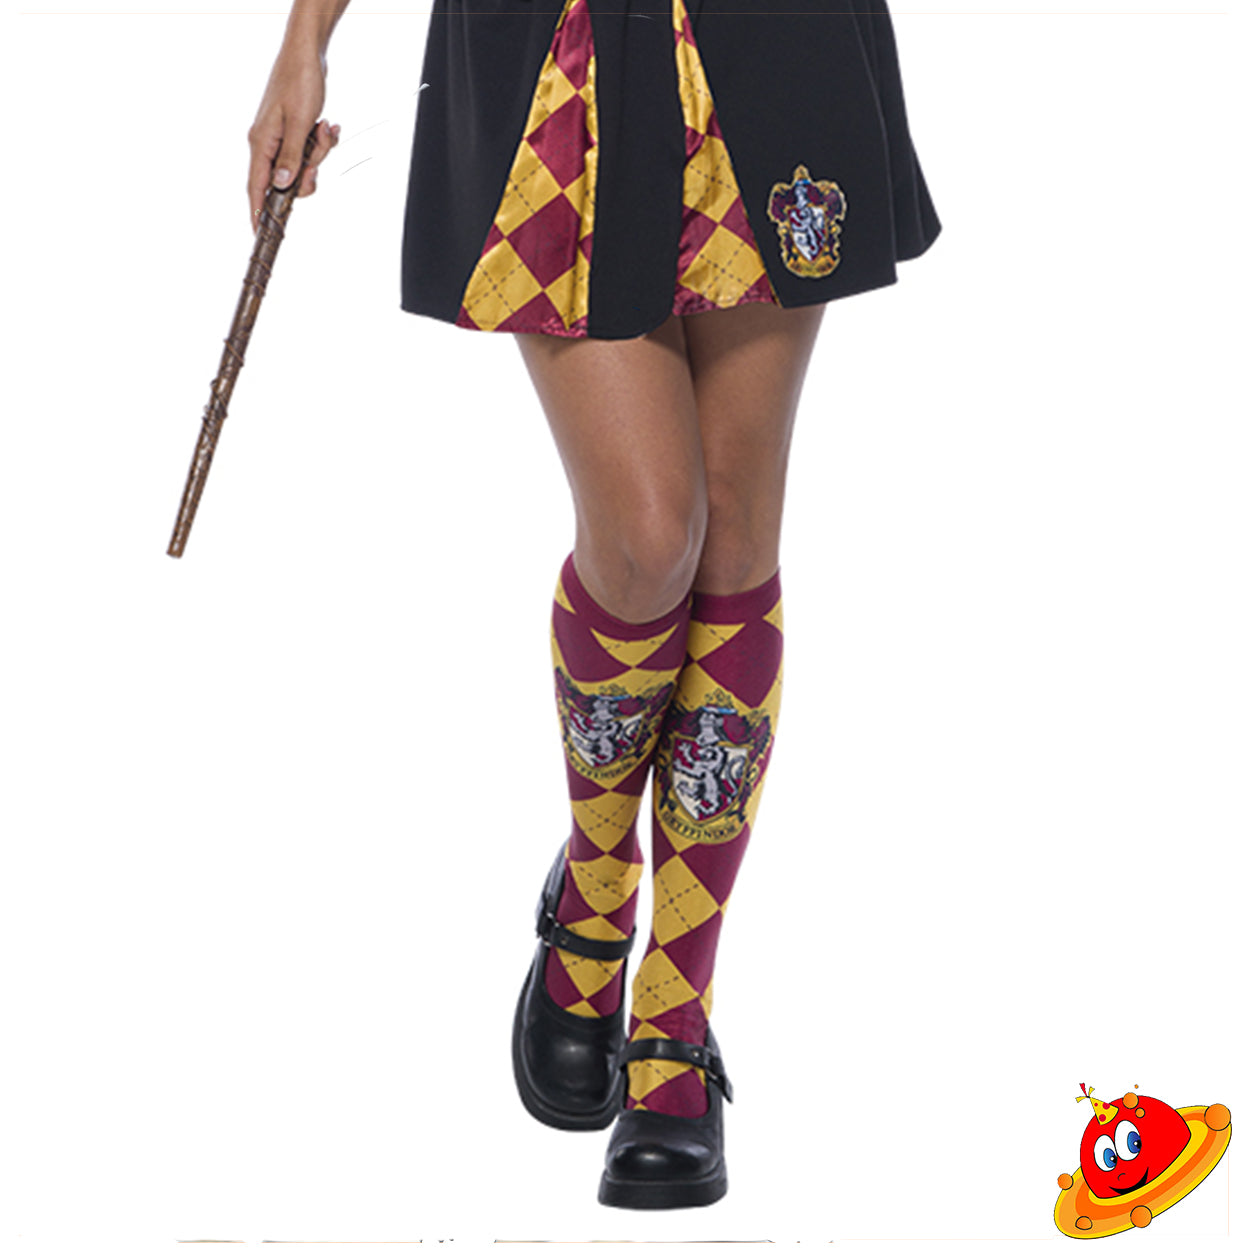 Calzini al ginocchio uniforme scolastica Hogwarts Gryffindor Harry Potter